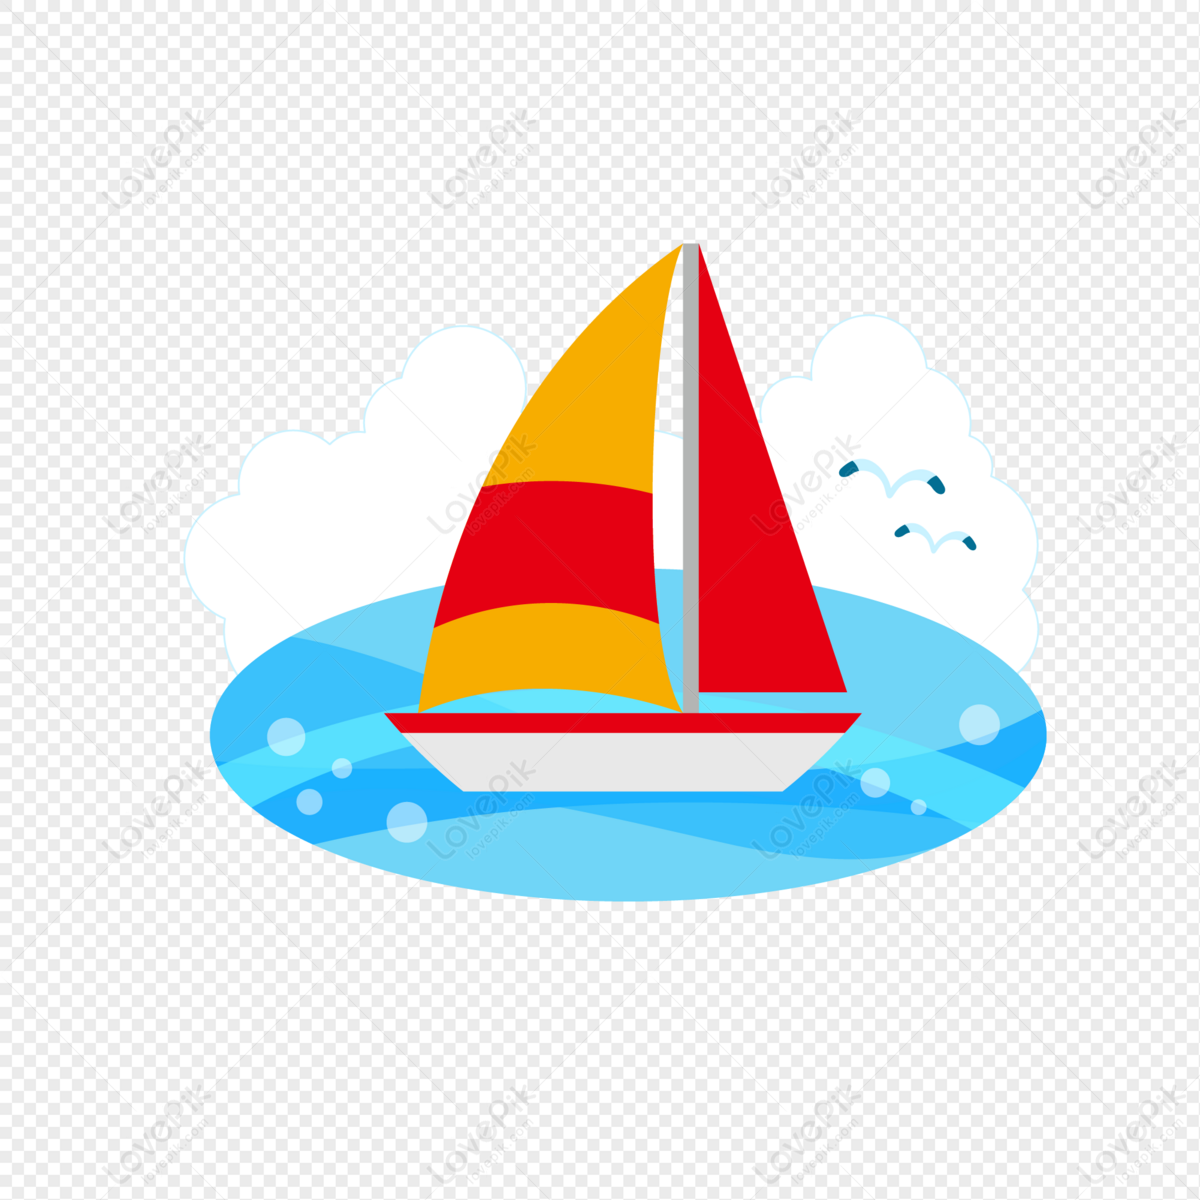 sailboat, sailboat icon, seagulls, sailing background png free download